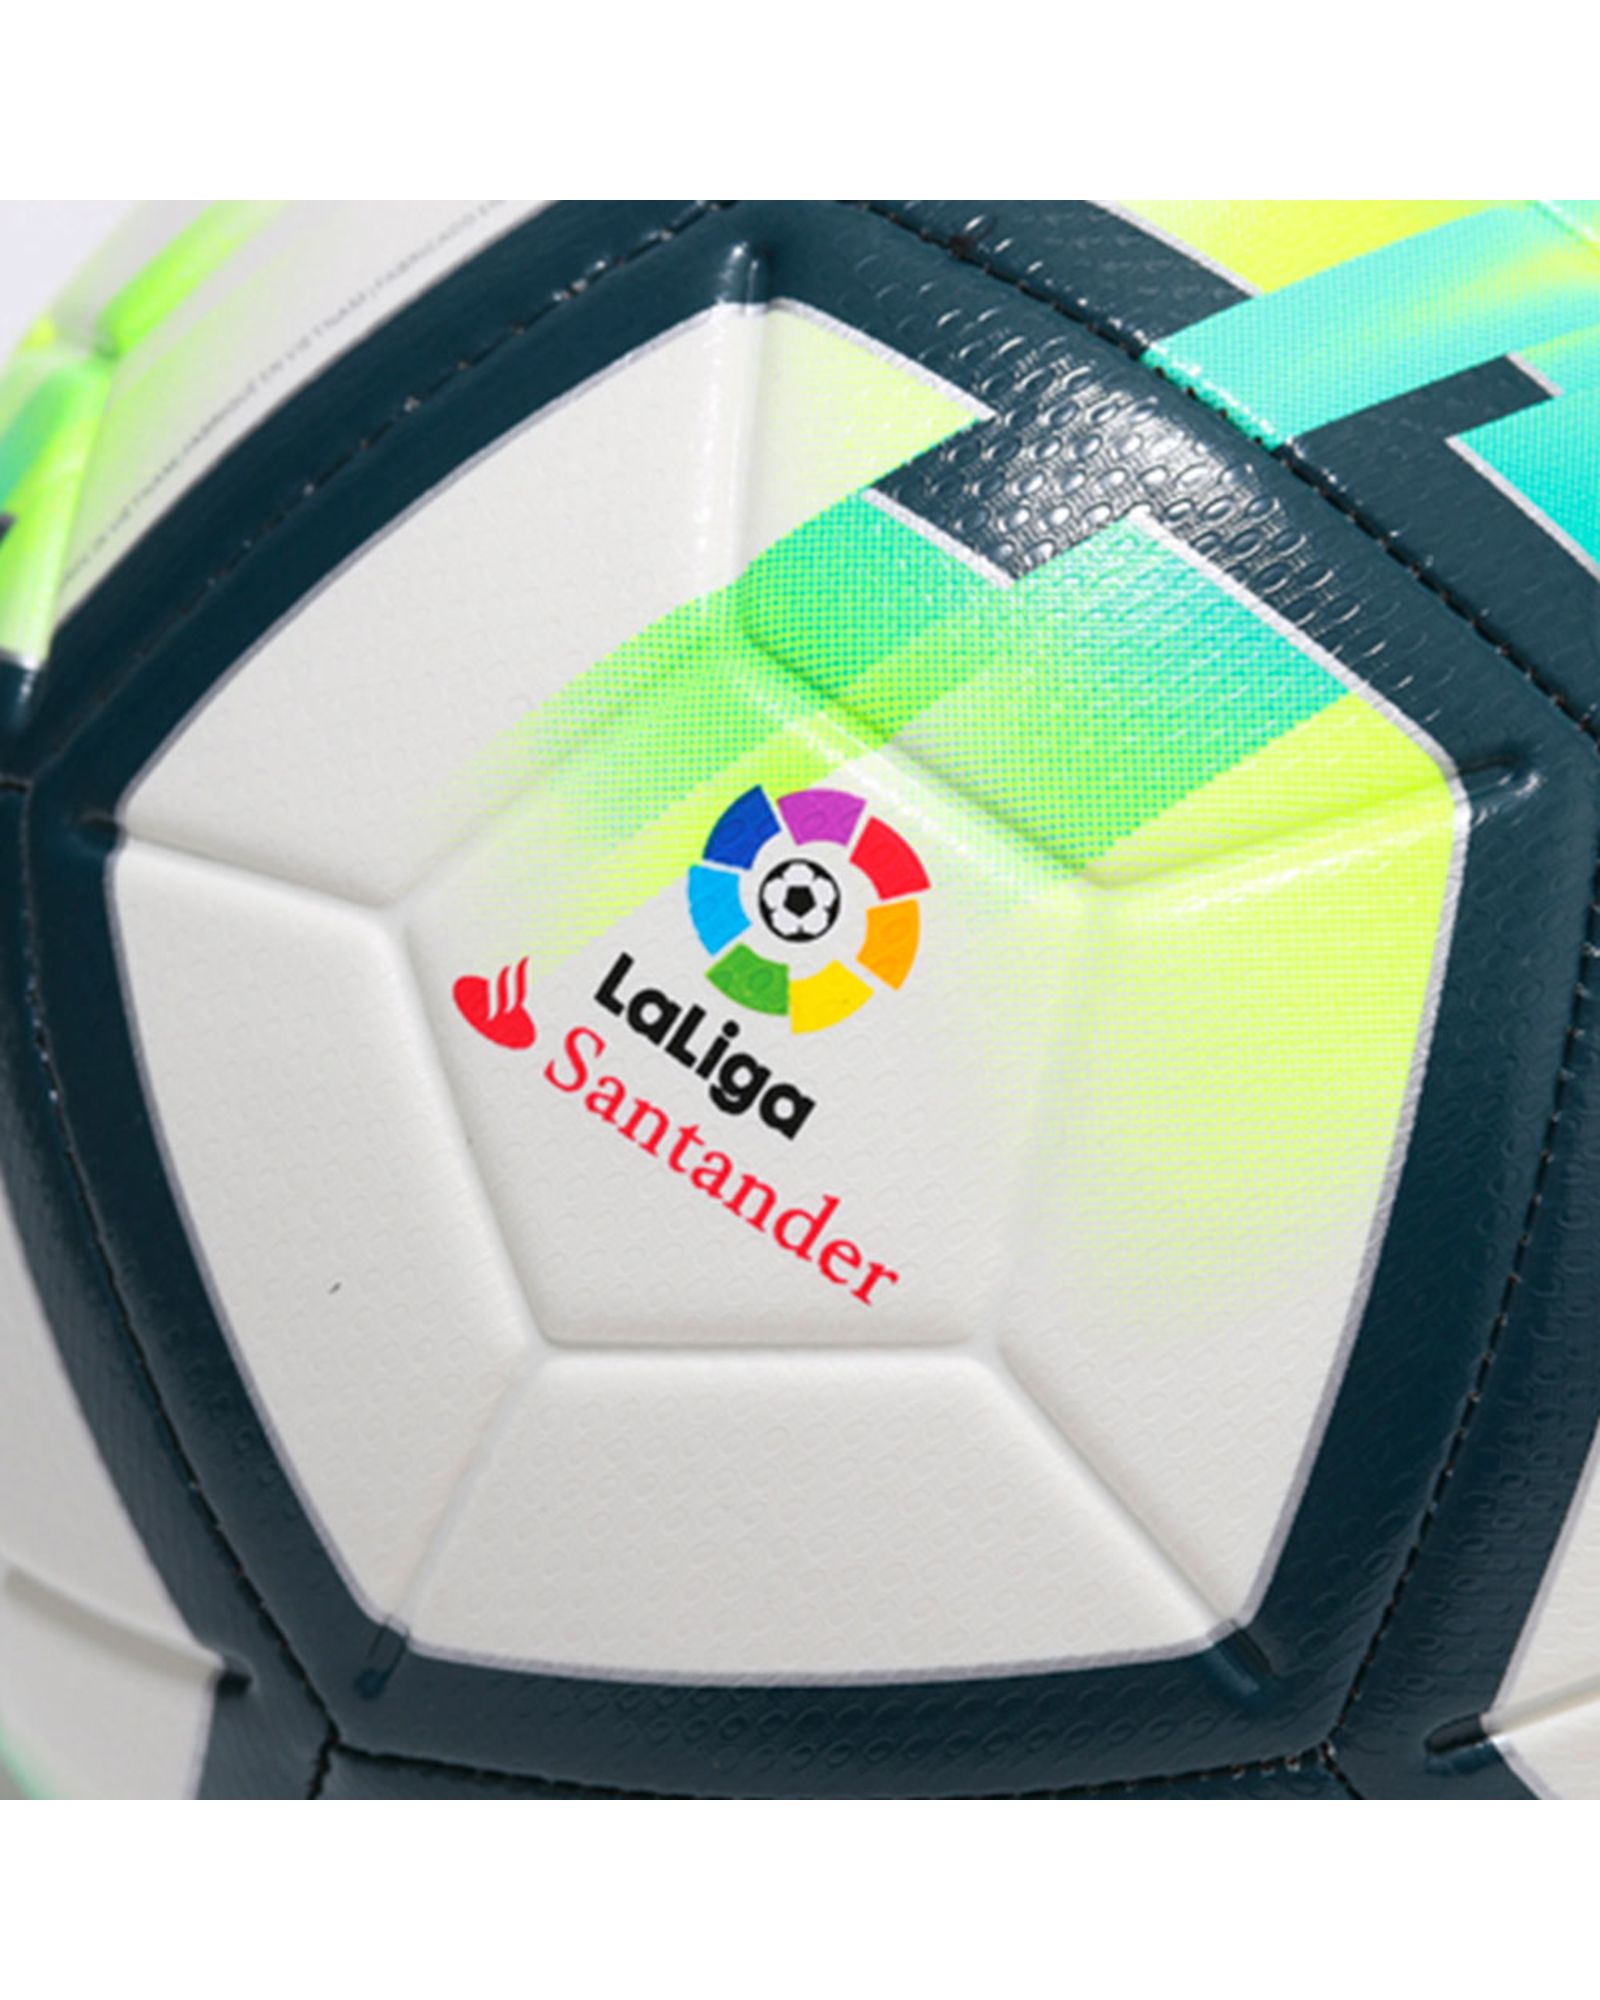 Balón de Fútbol 11 Strike Liga Santander 2017/2018 - Fútbol Factory